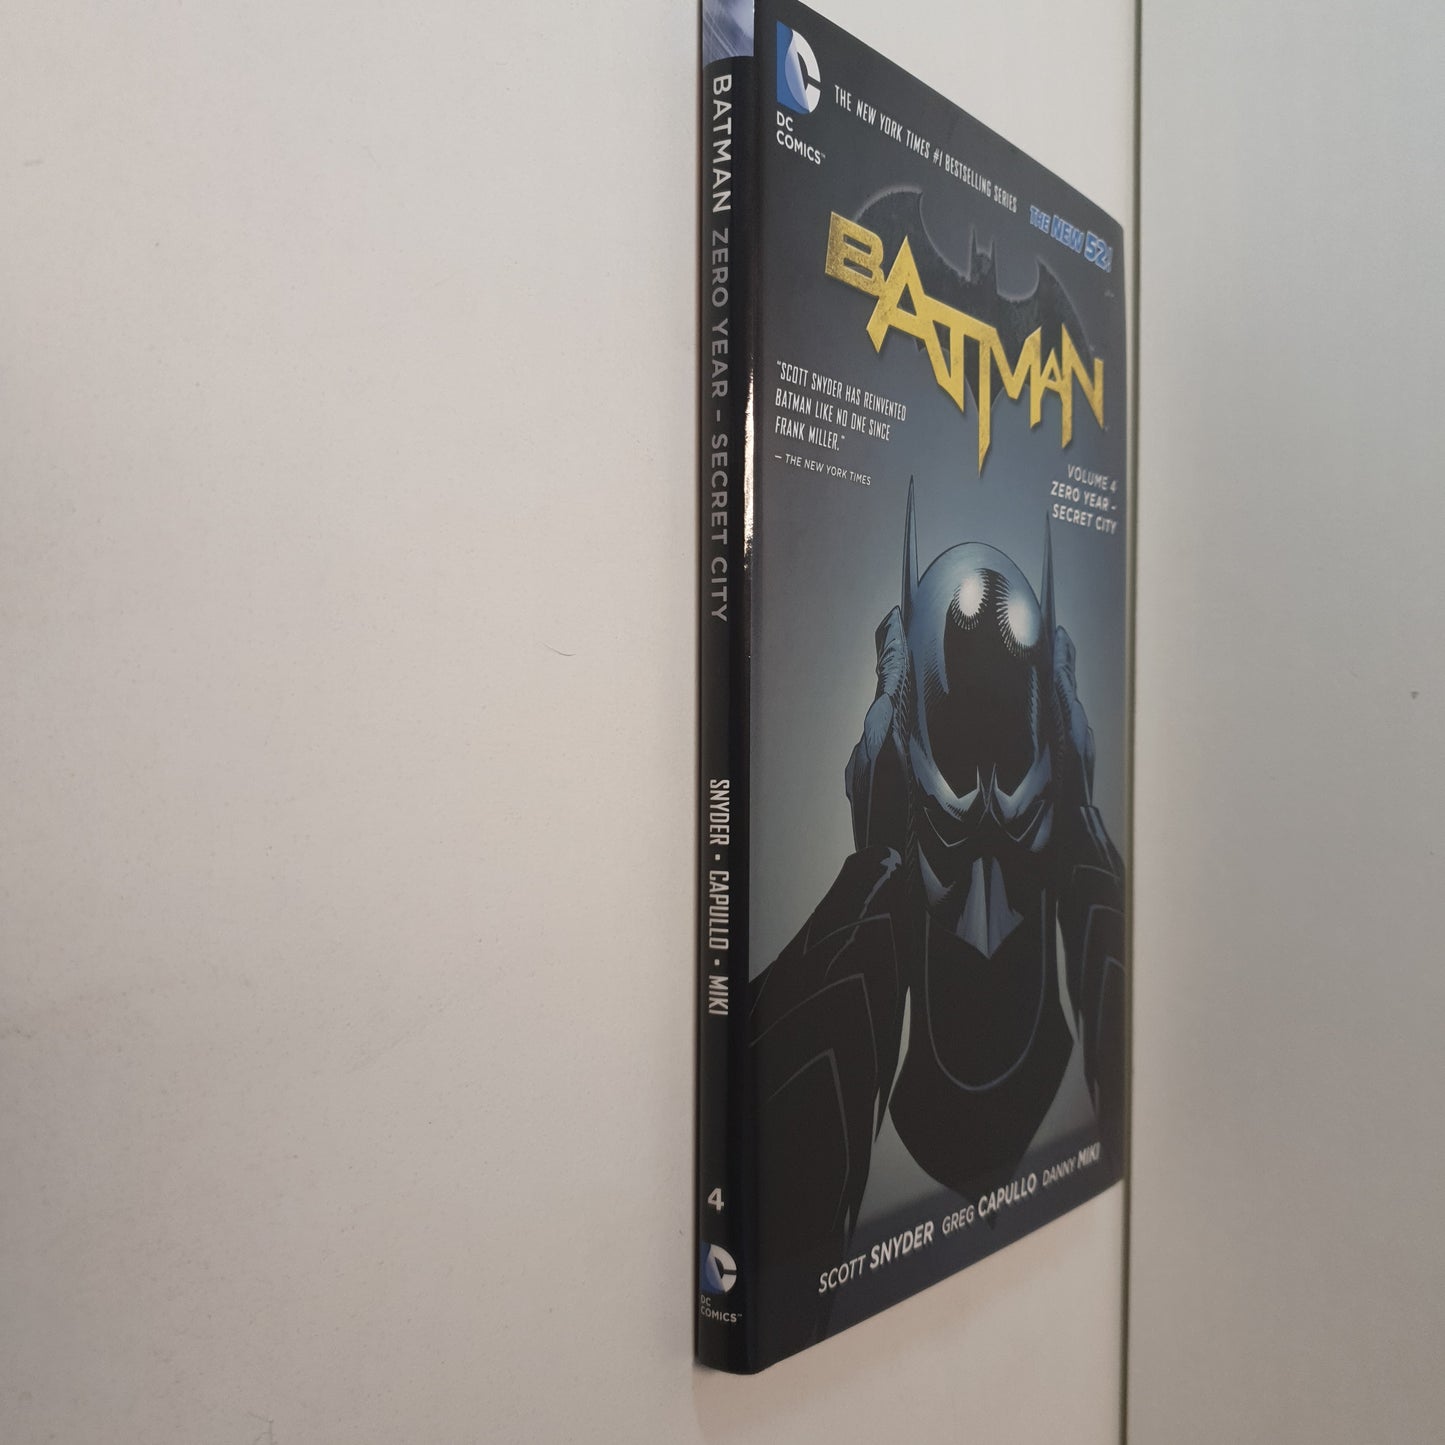 Batman Vol 4 Zero Year - Secret City by Snyder, Capullo & Miki (2014)